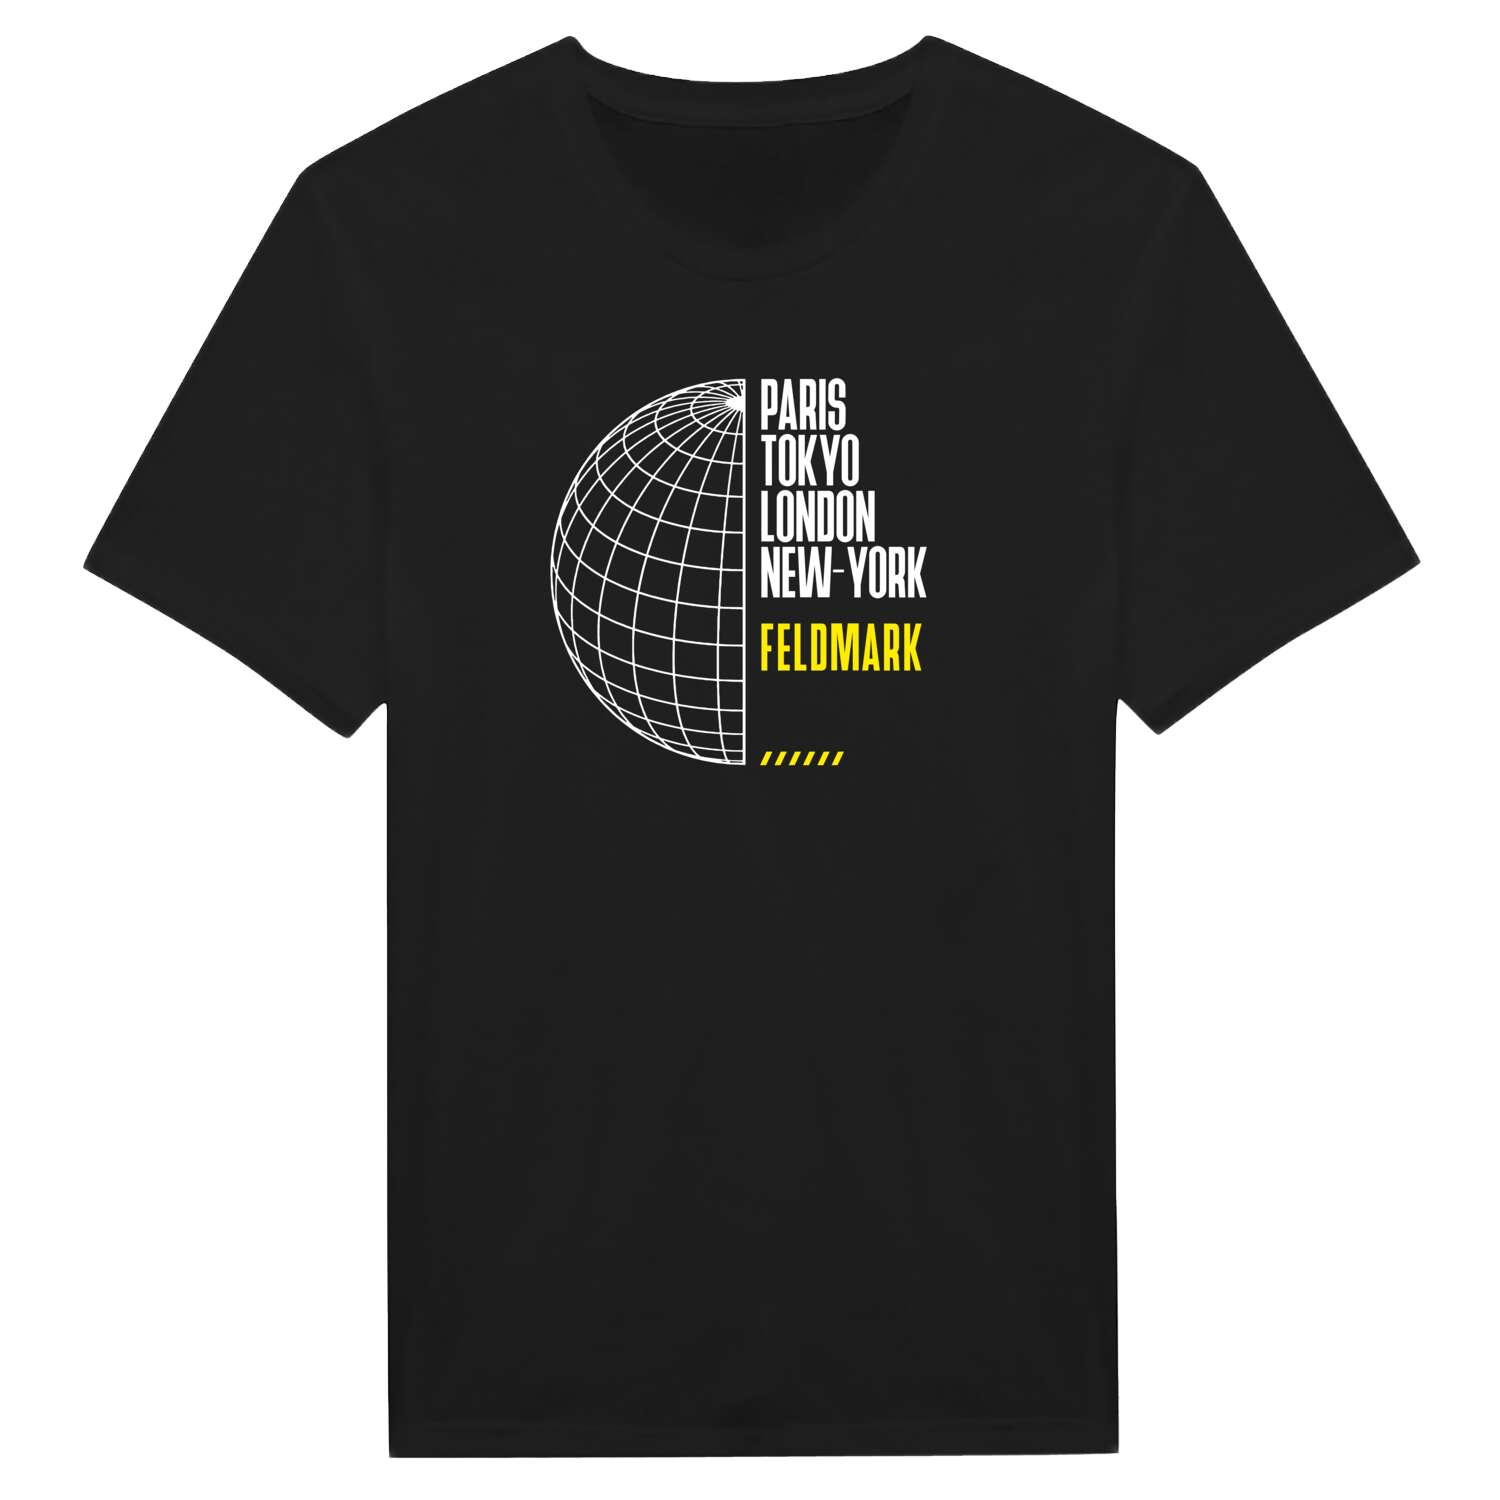 Feldmark T-Shirt »Paris Tokyo London«